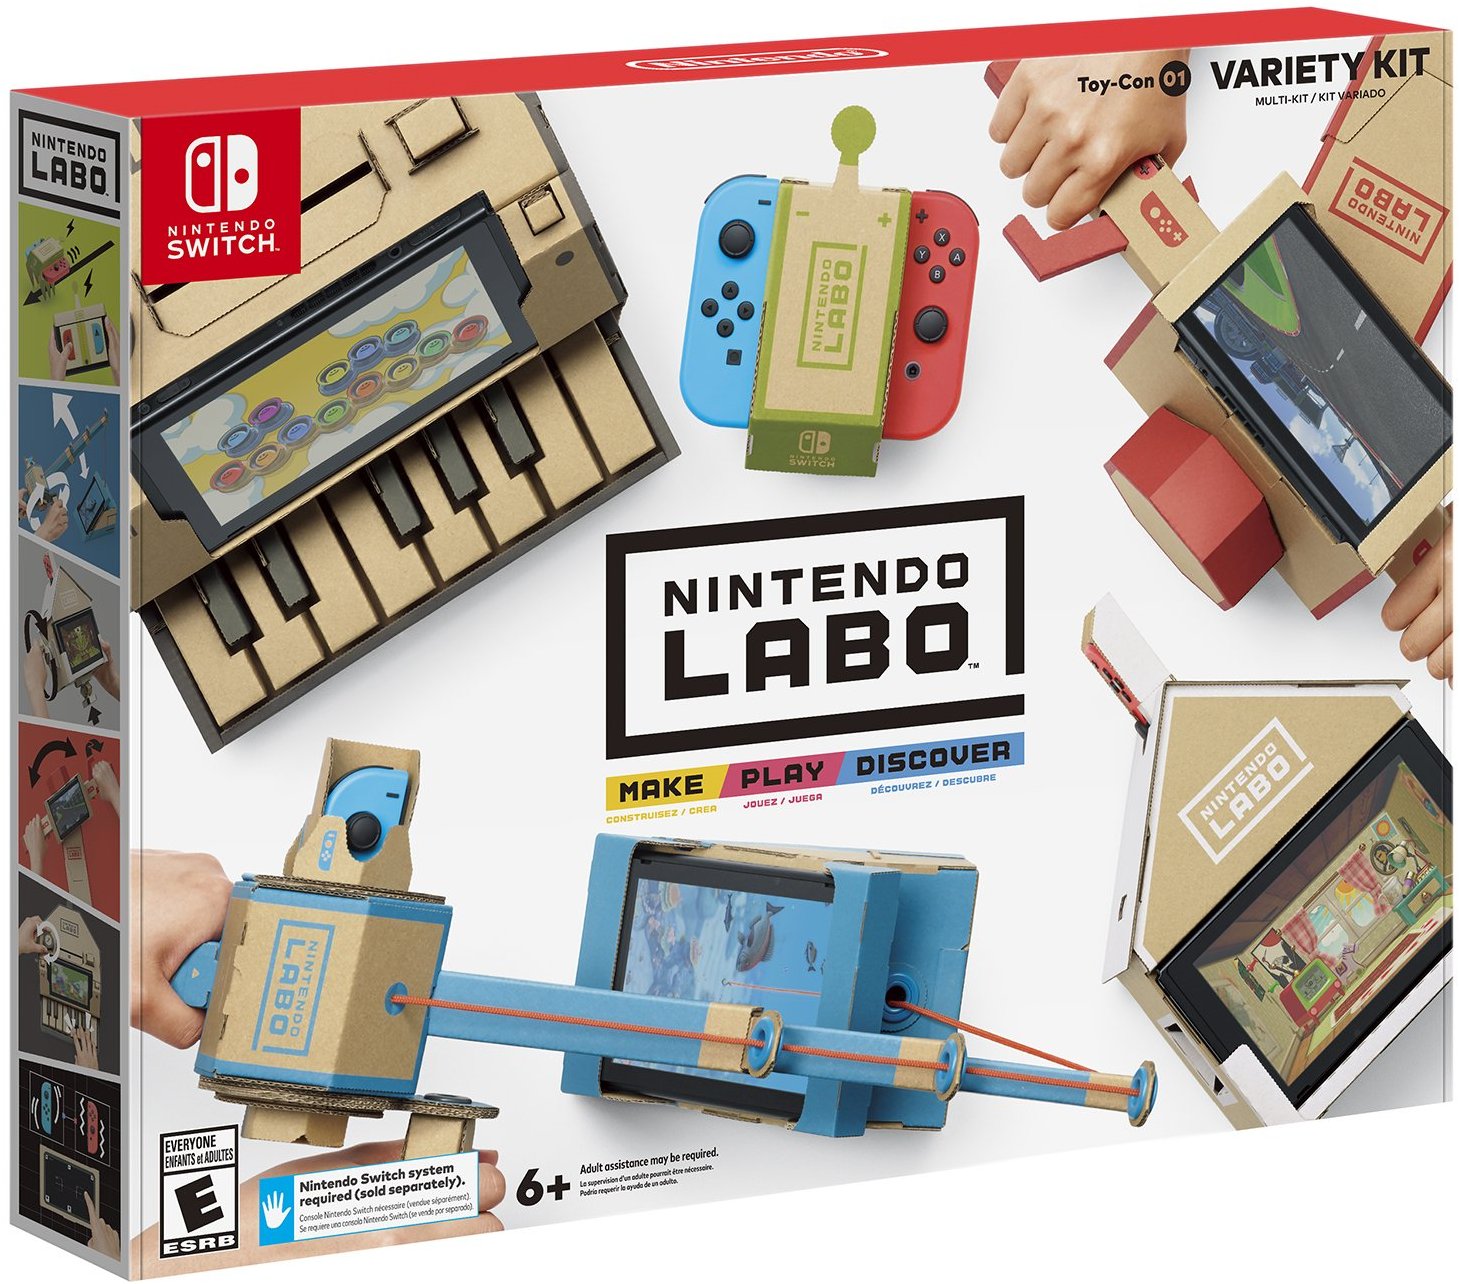 Introducing Nintendo Labo